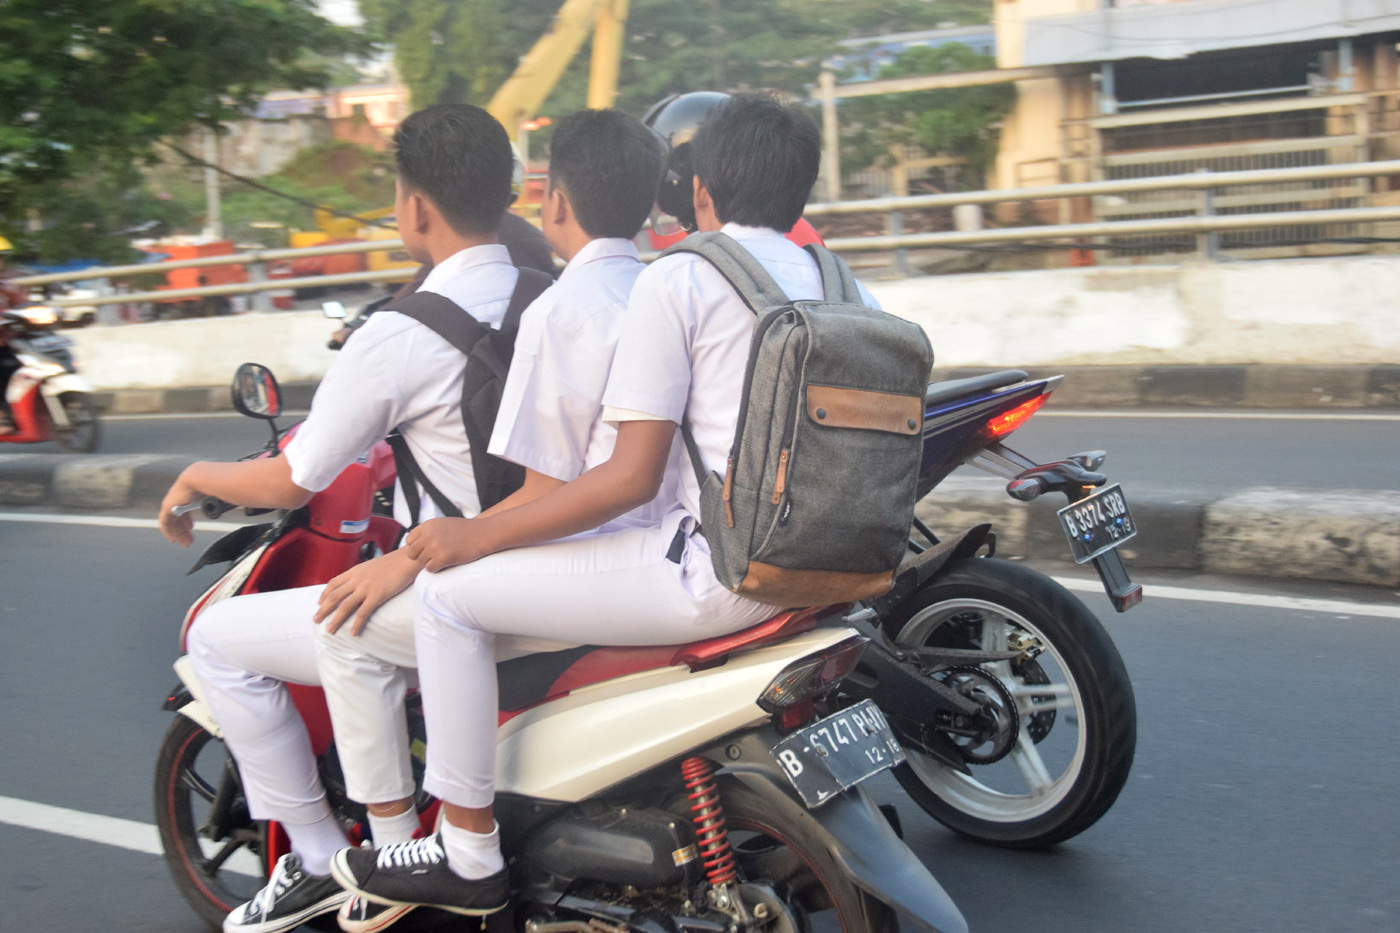 Sejumlah pelajar mengendarai motor tanpa menggunakan helm di hari pertama masuk sekolah tahun ajaran 2016/2017, Jakarta, Senin, (18/7). Tindakan yang membahayakan keselamatan pelajar tersebut tersebut bebas dari pengawasan dan pemantauan dari aparat kepolisian lalulintas. TIRTO/Andrey Gromico